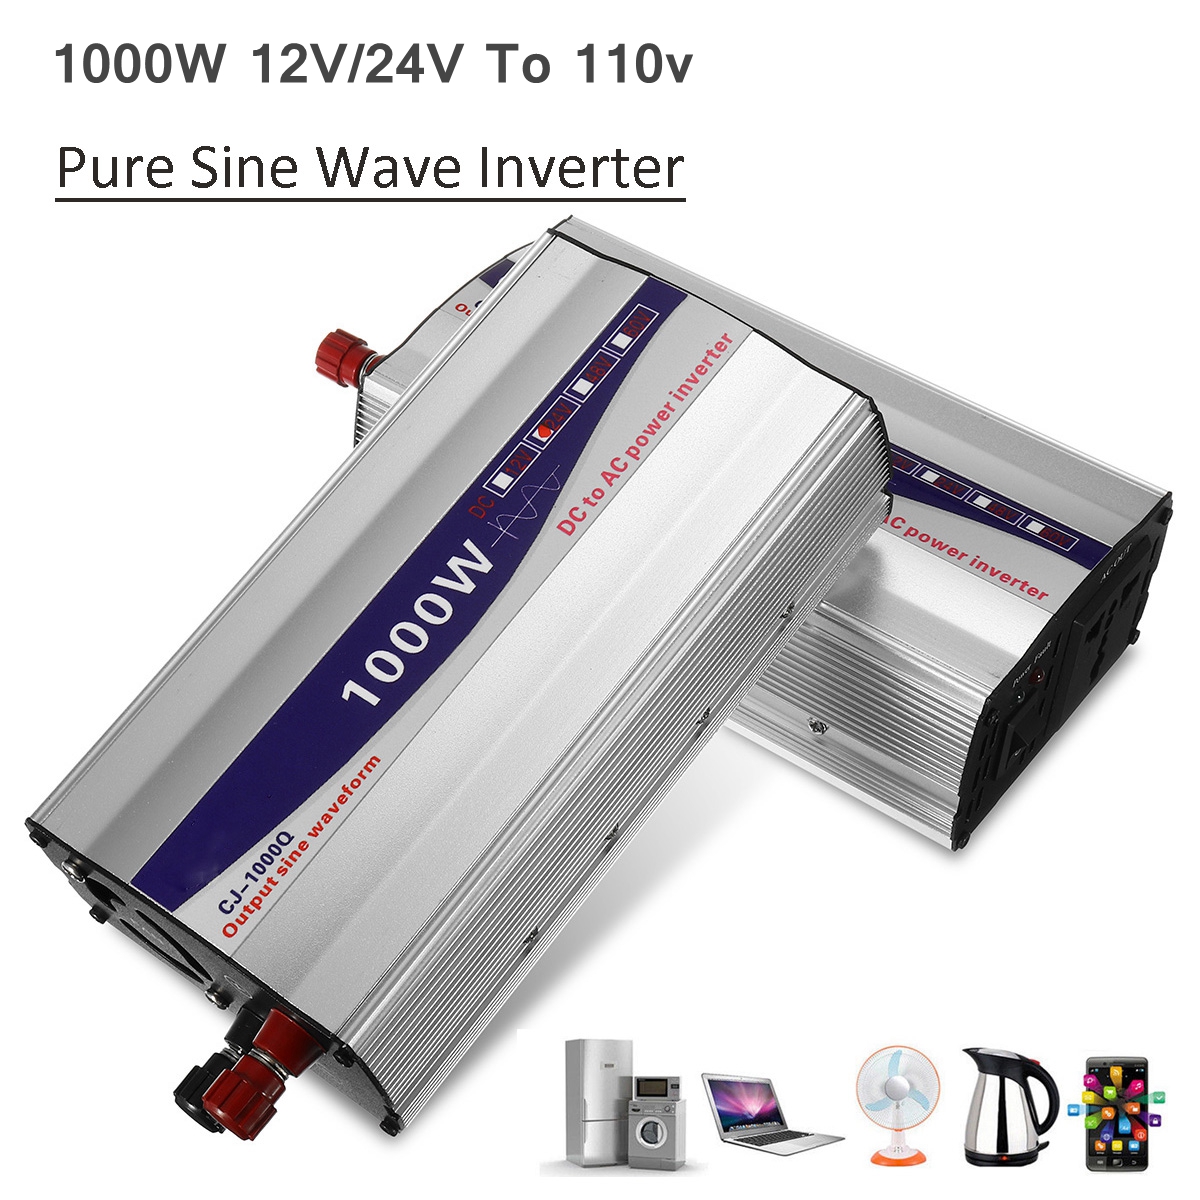 1000W-Peak-12V--24V-to-110V-Pure-Sine-Wave-Inverter-Power-Inverter-Converter-1549858-2